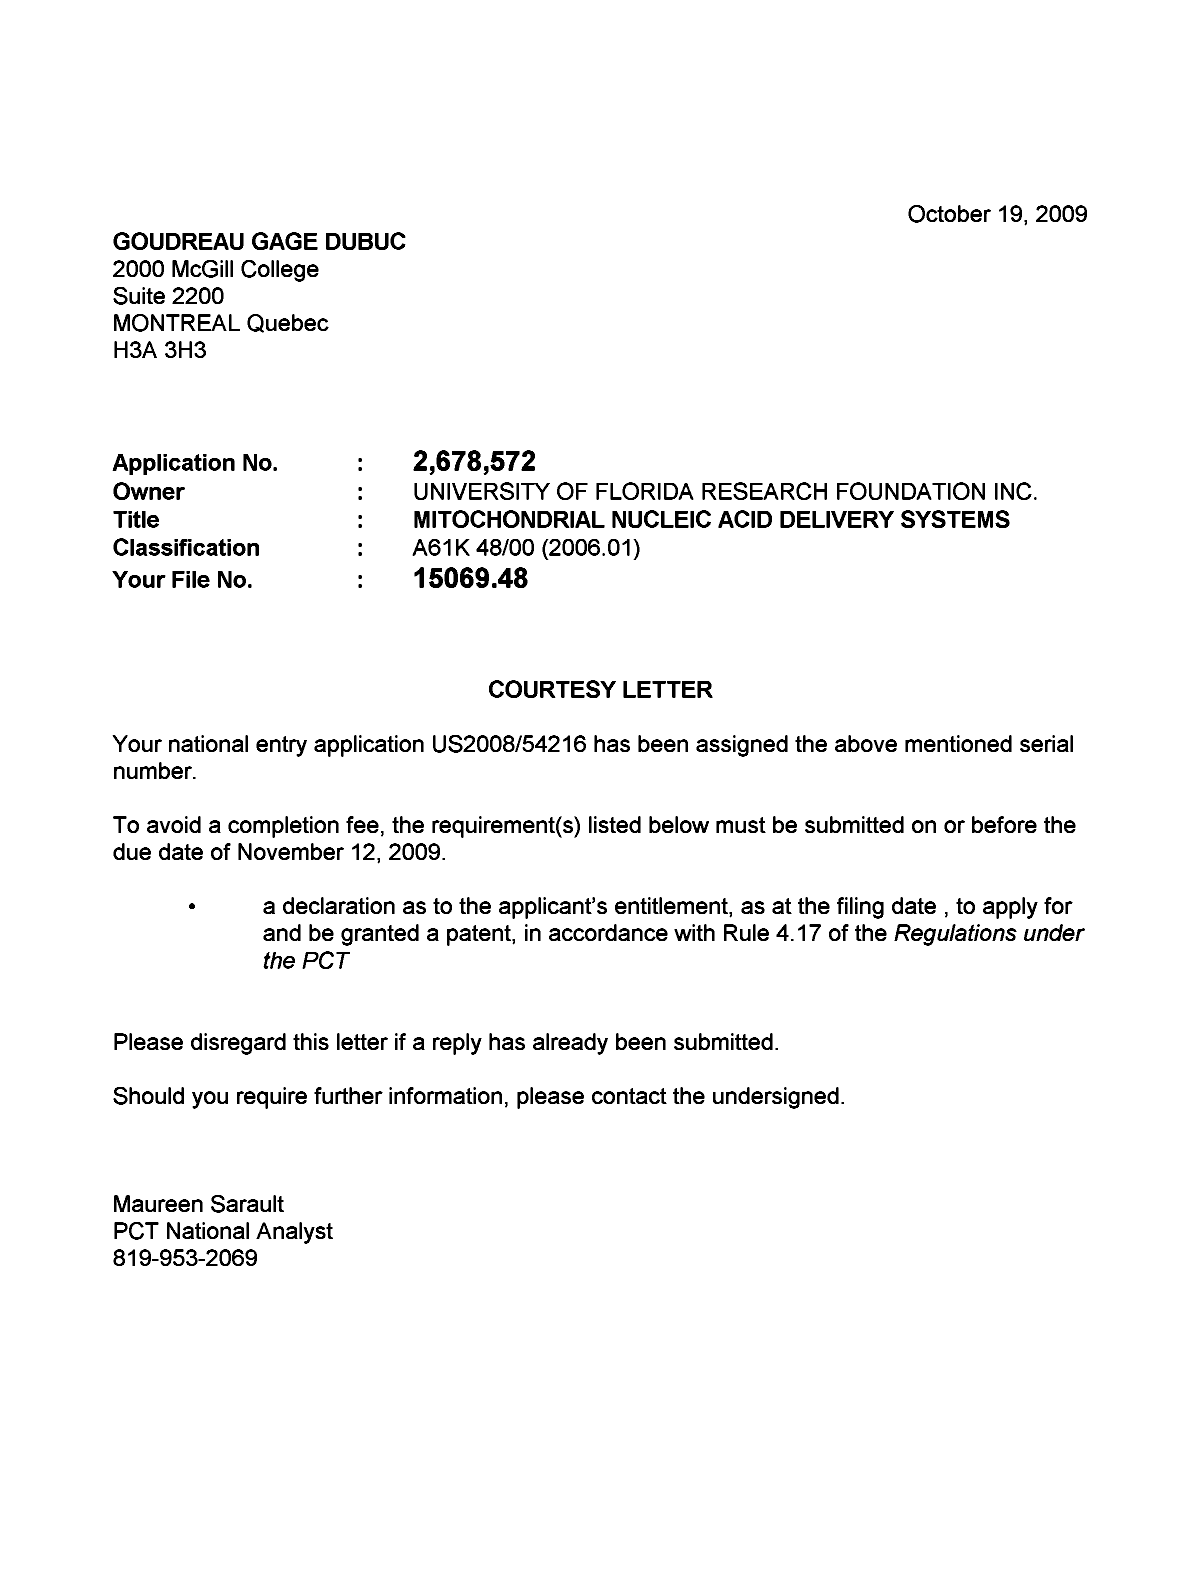 Canadian Patent Document 2678572. Correspondence 20091019. Image 1 of 1